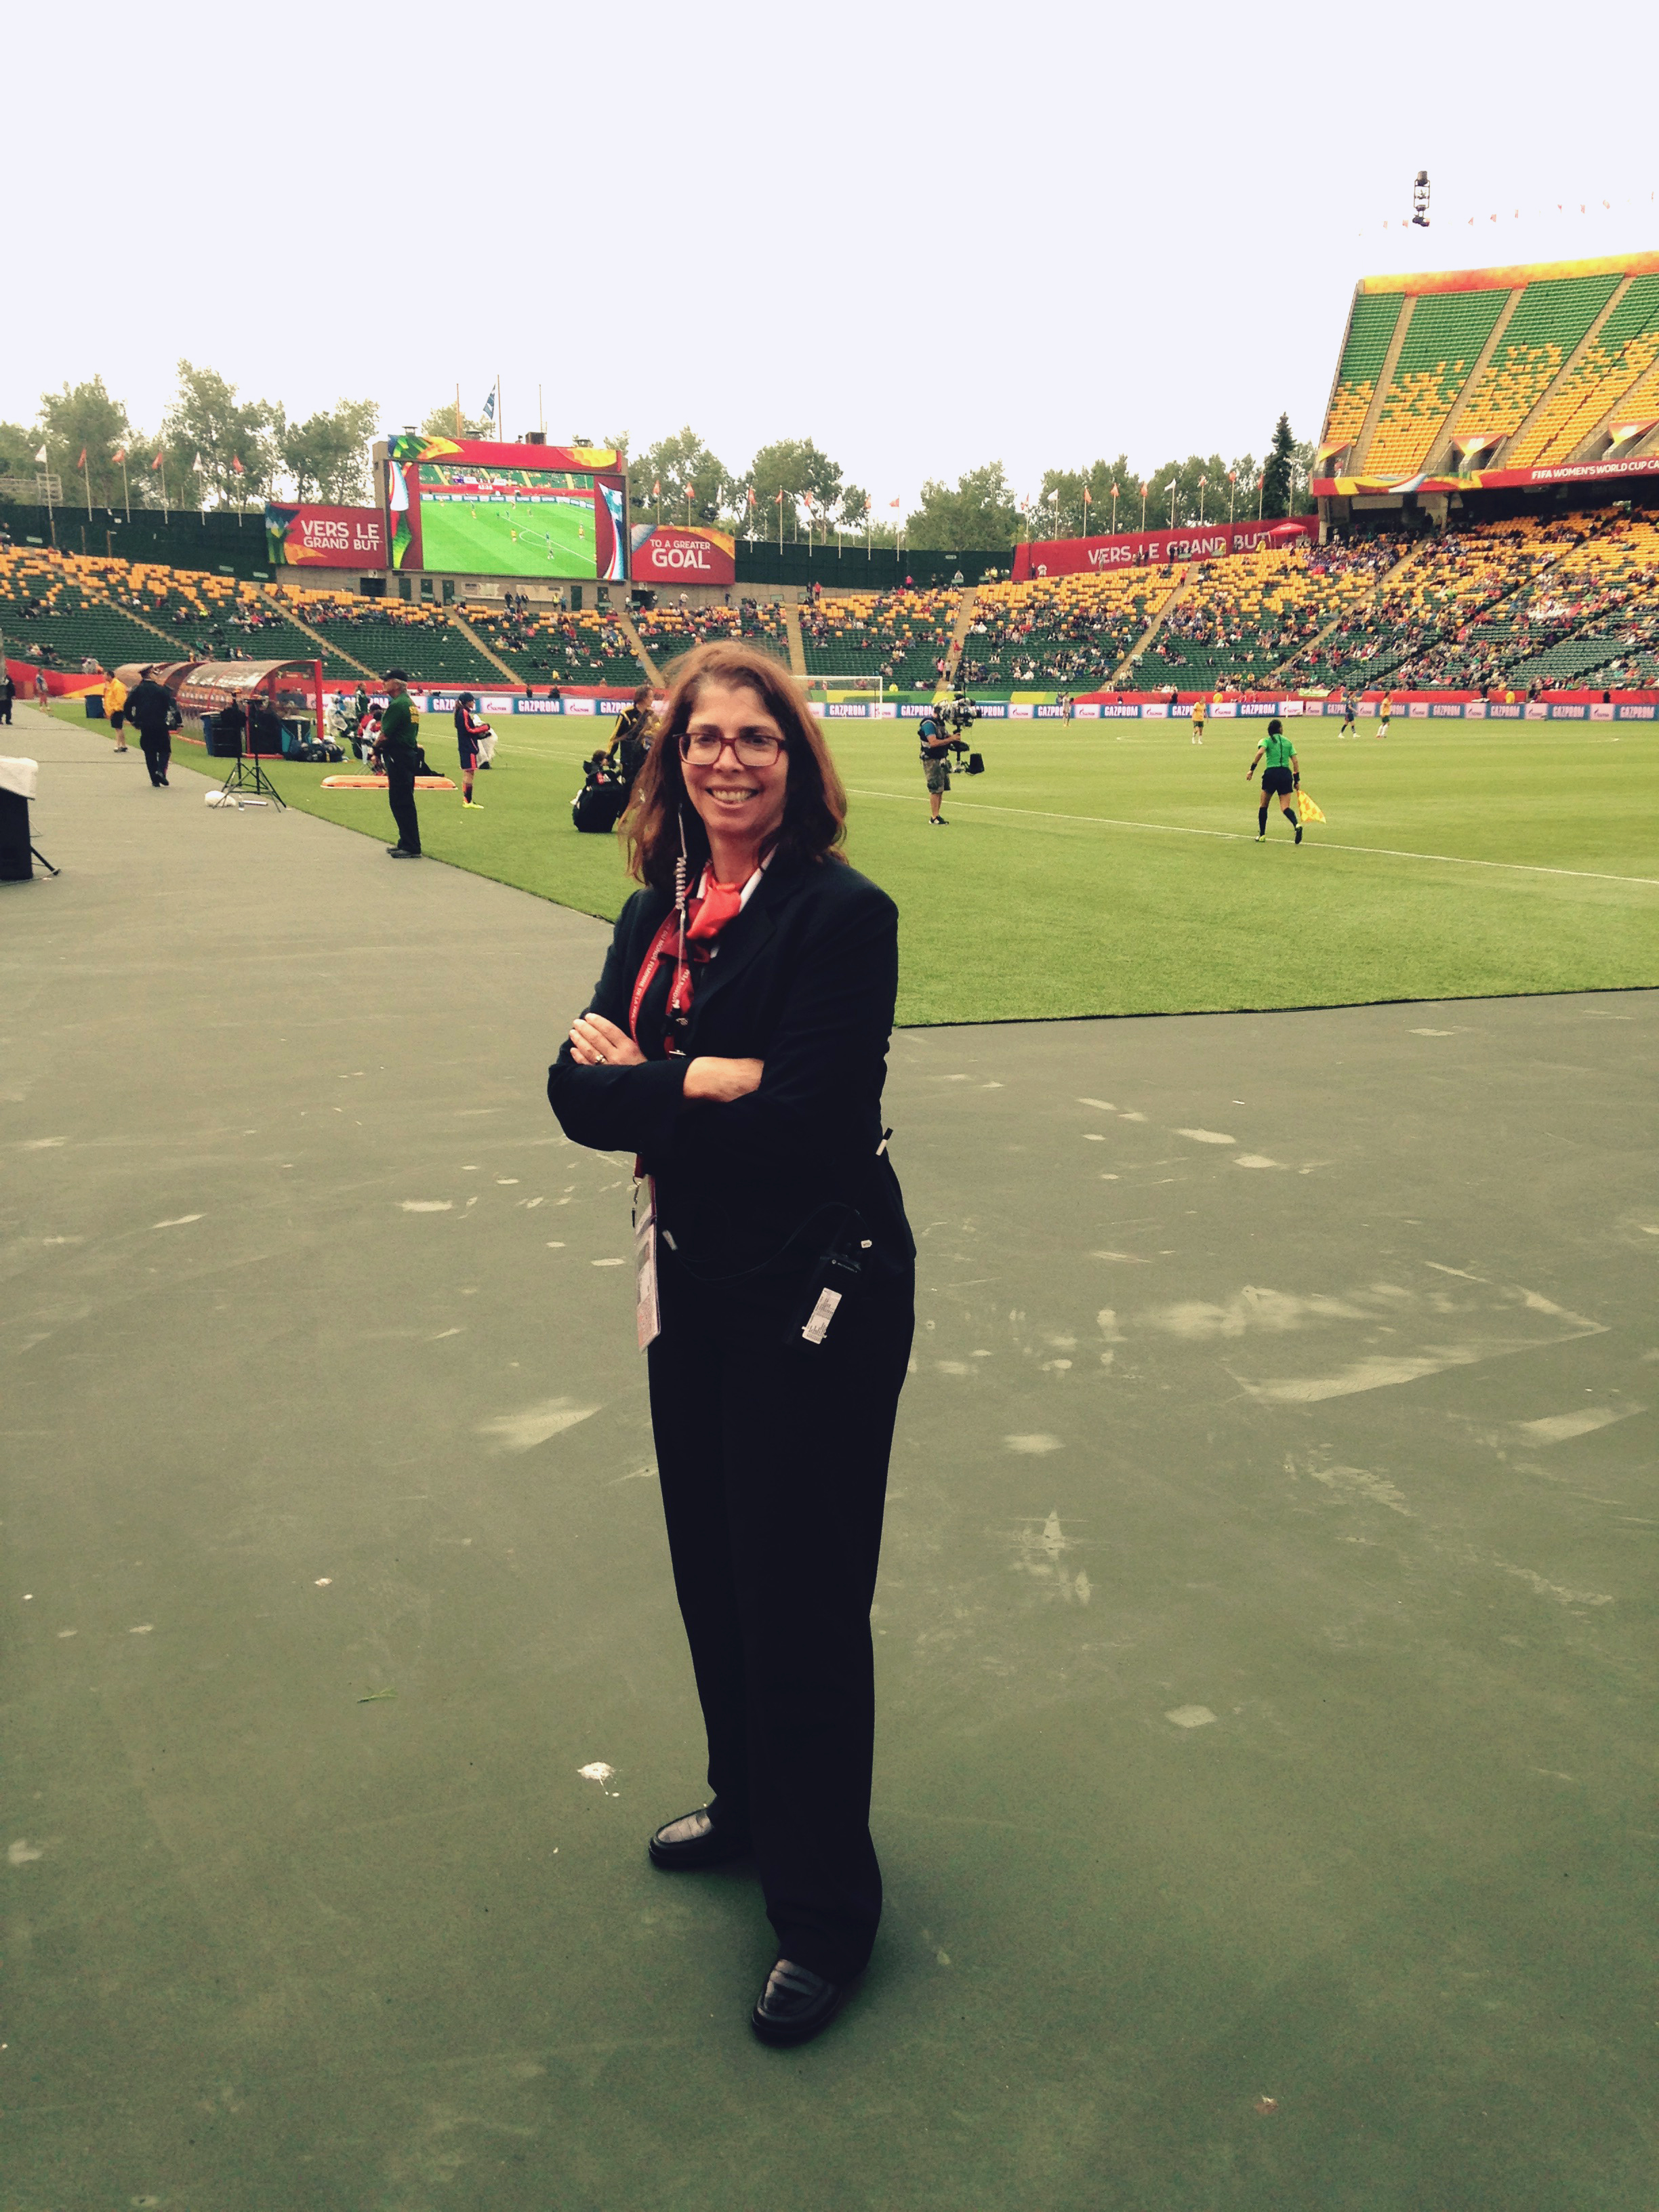 Teresa De Freitas at Commonwealth Stadium